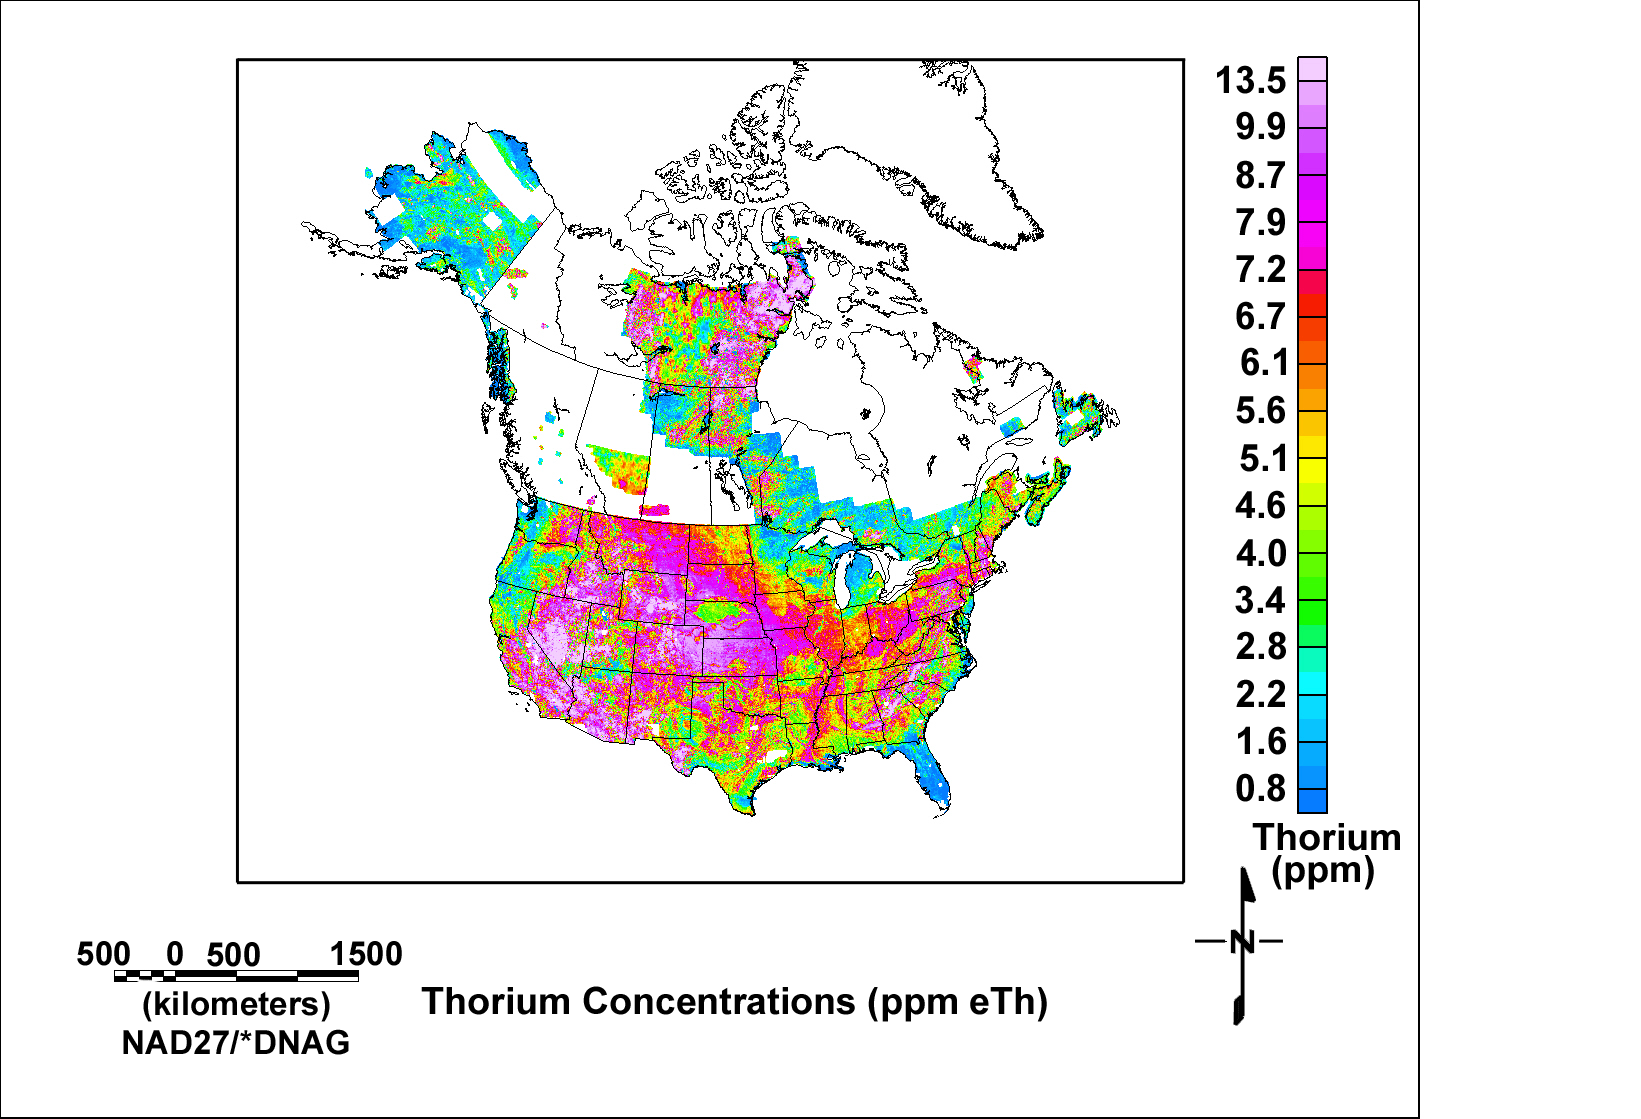 Full-resolution version of the thorium map.